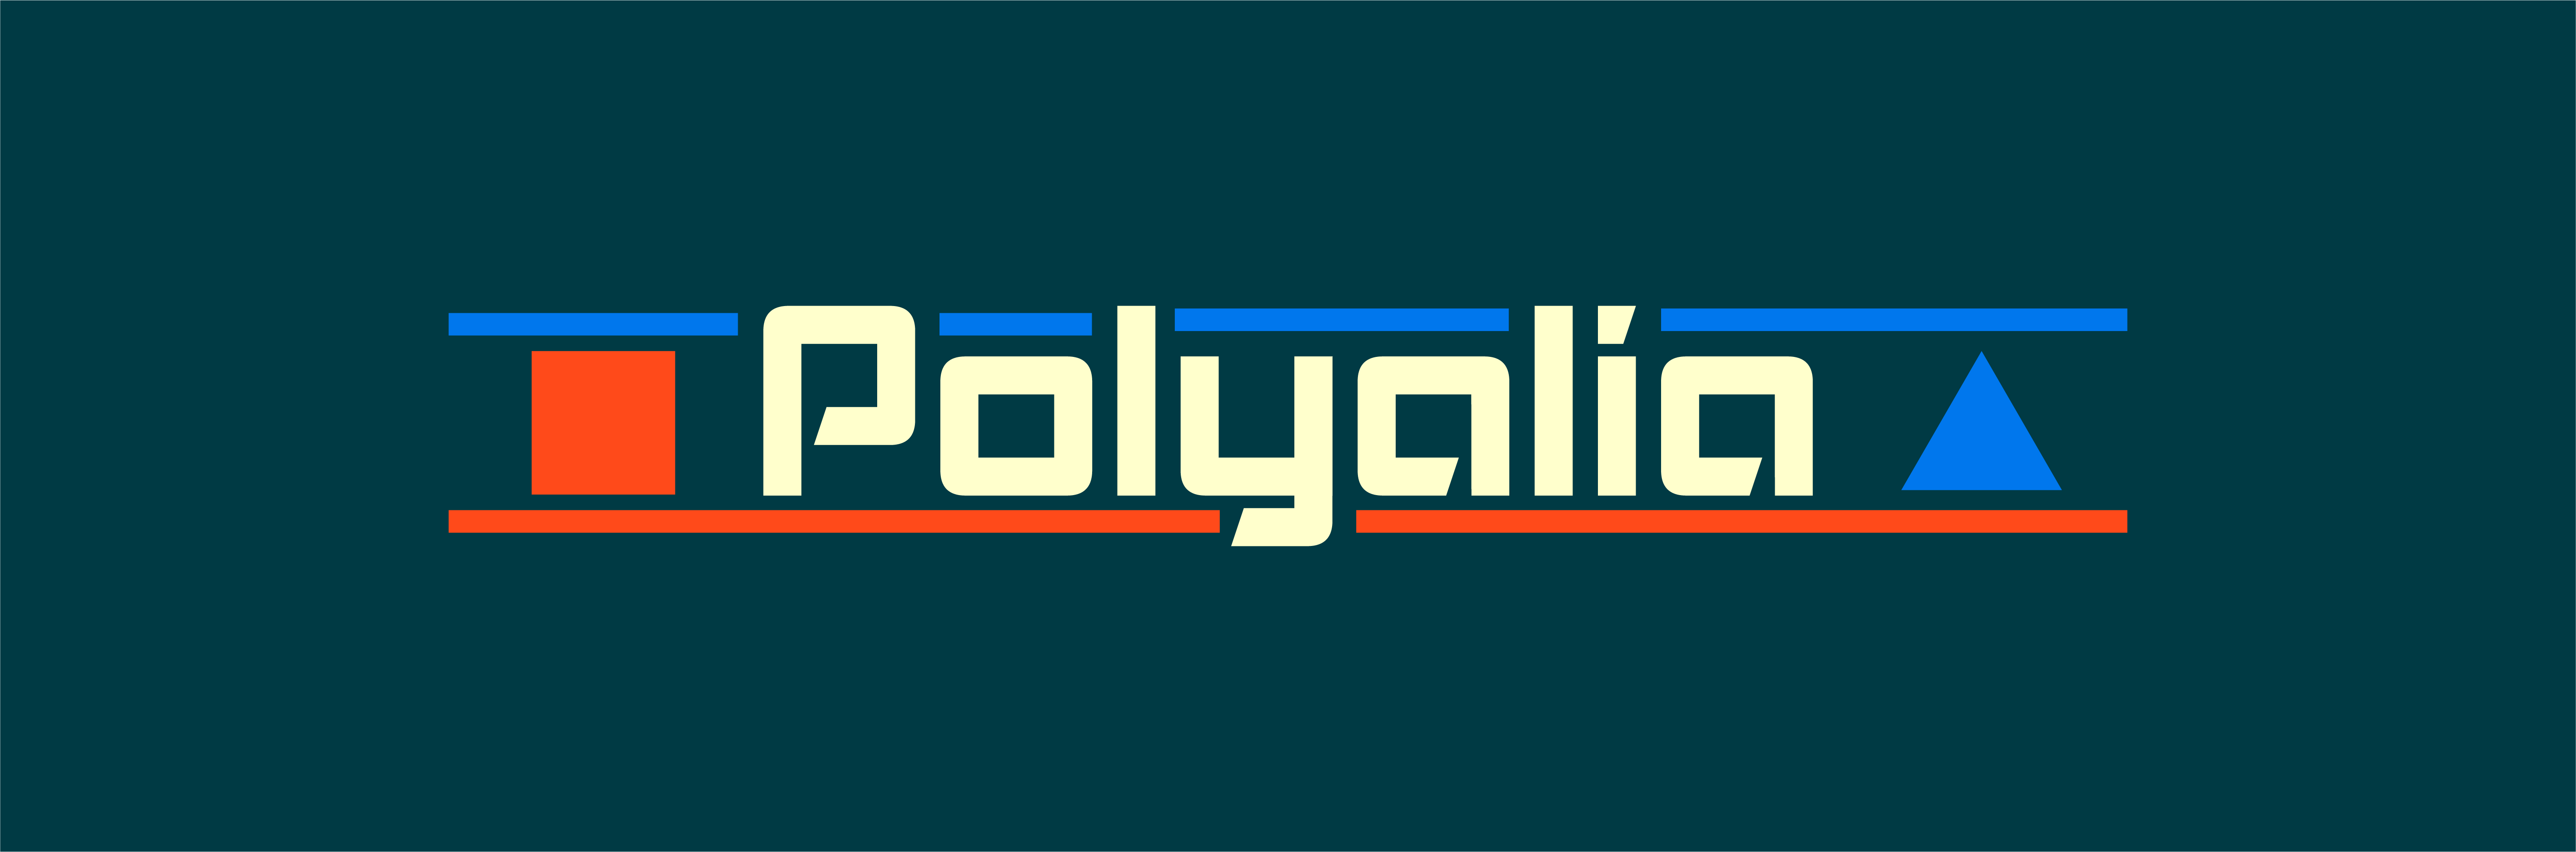 Polyalia